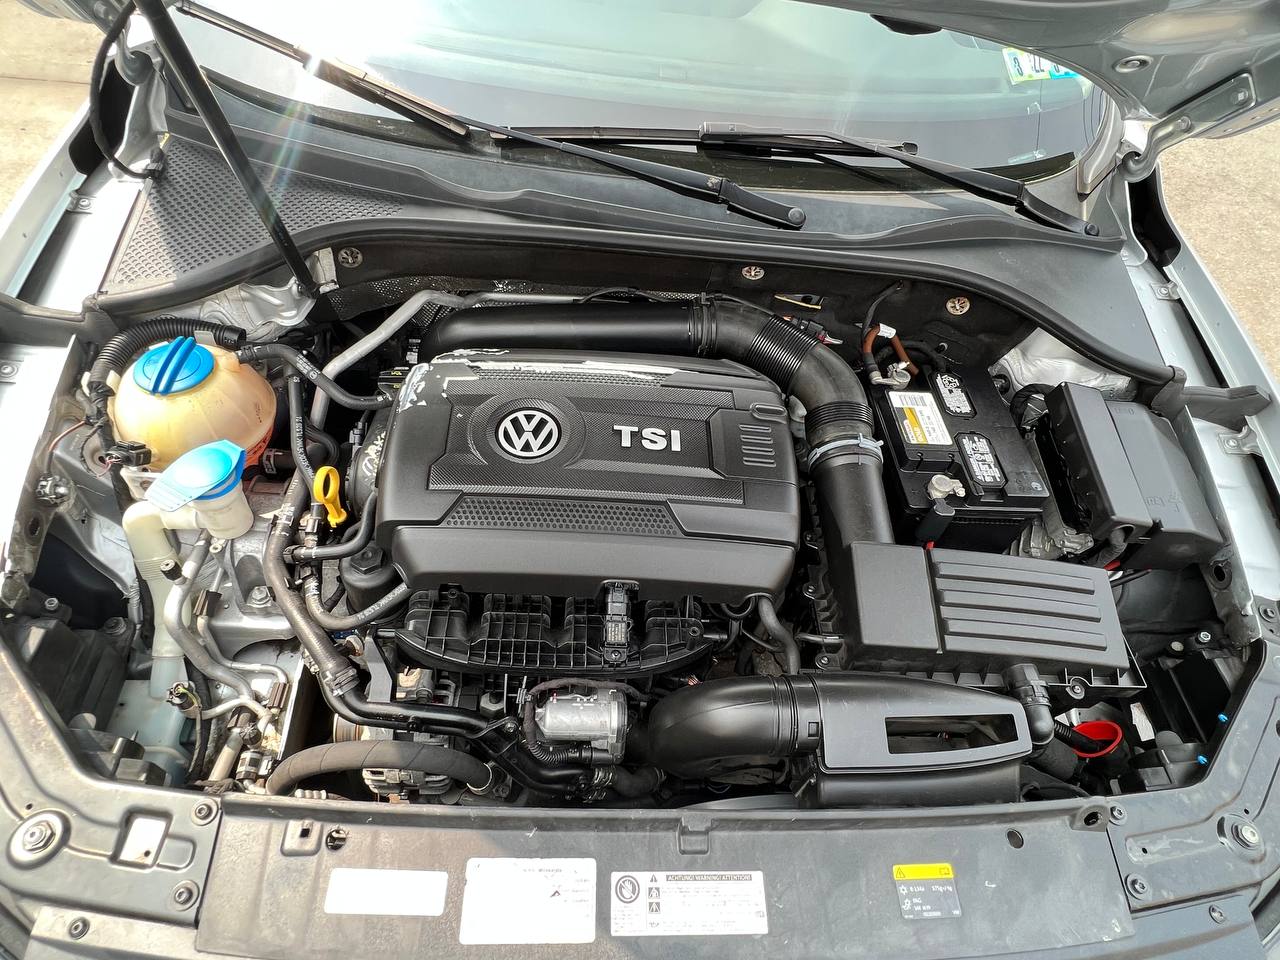 Used - Volkswagen Passat 1.8T Wolfsburg Sedan for sale in Staten Island NY